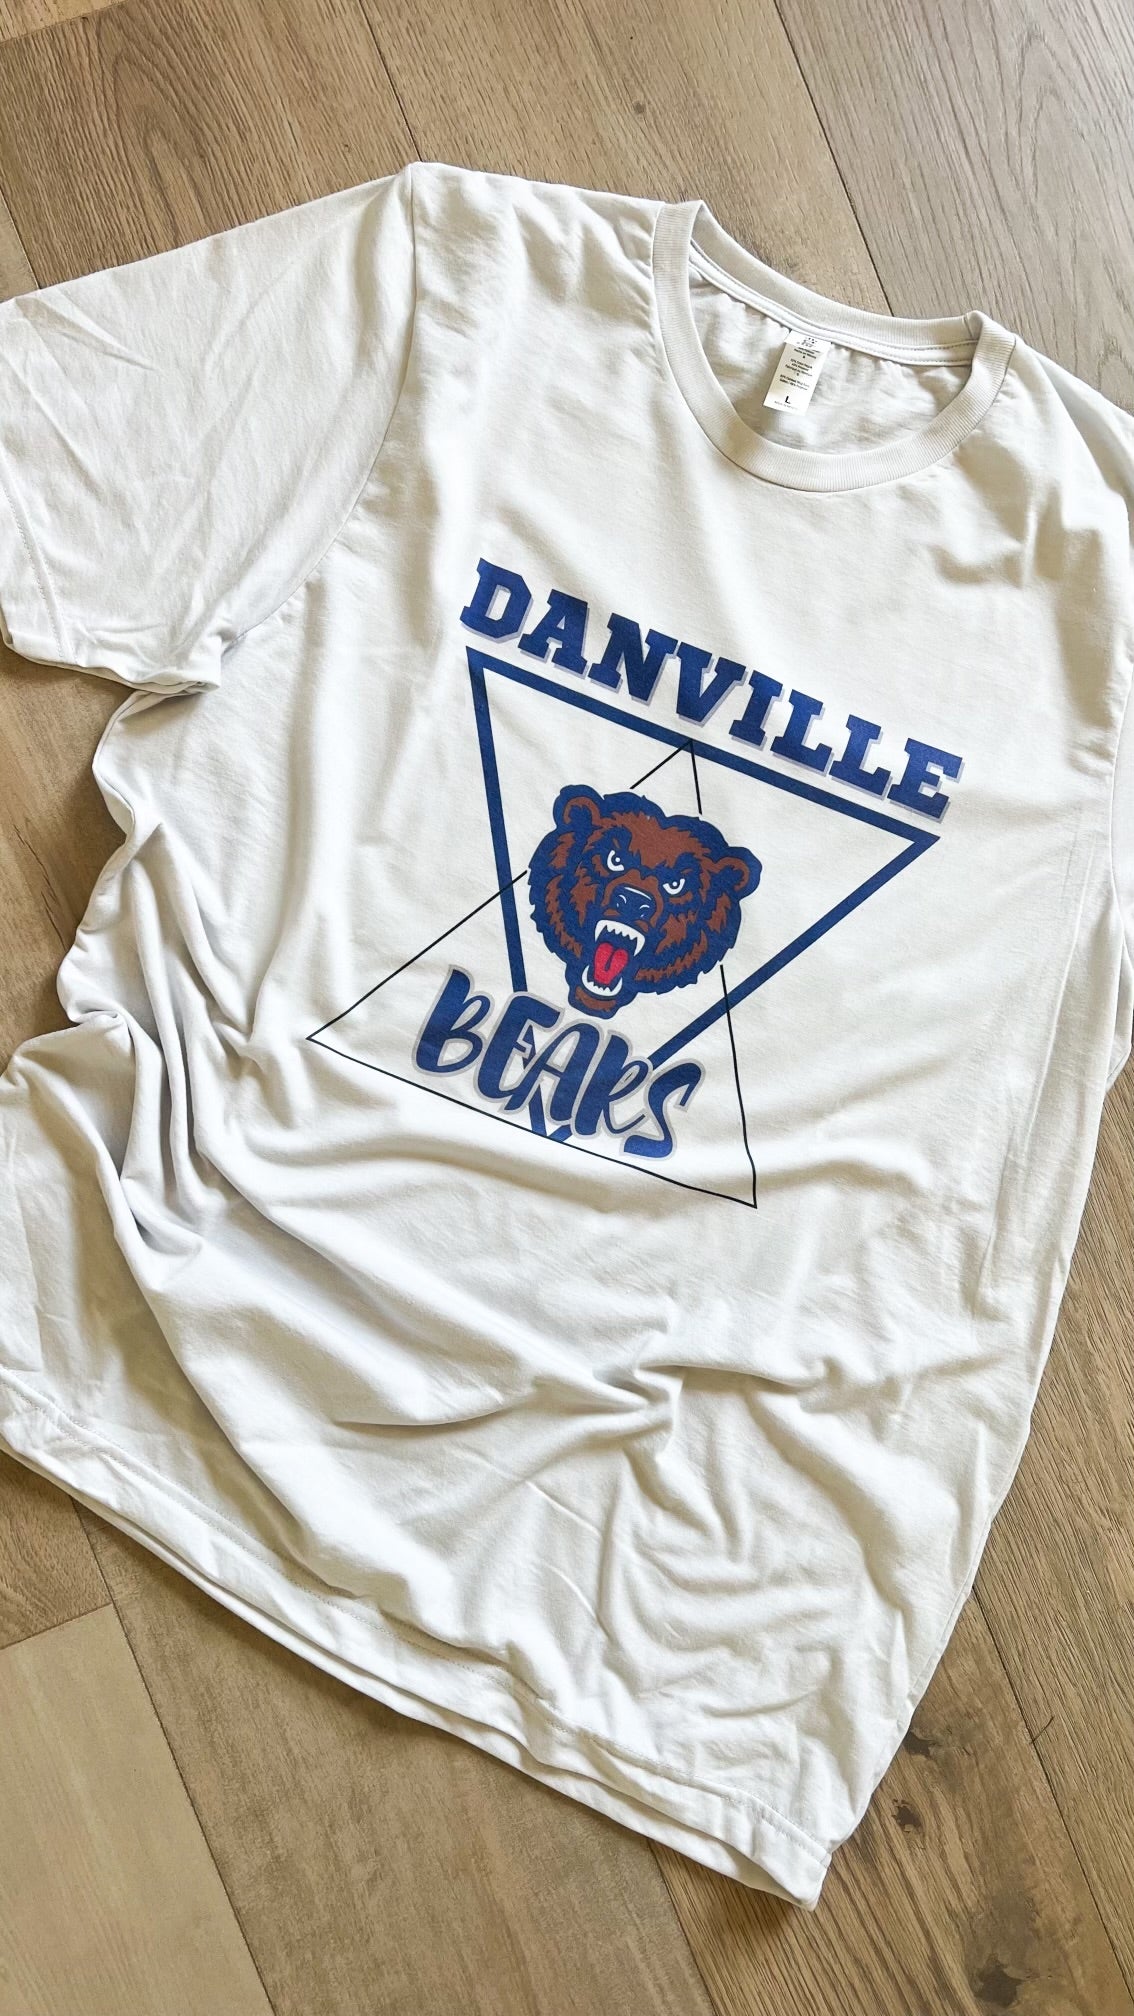 Danville Bears Graphic